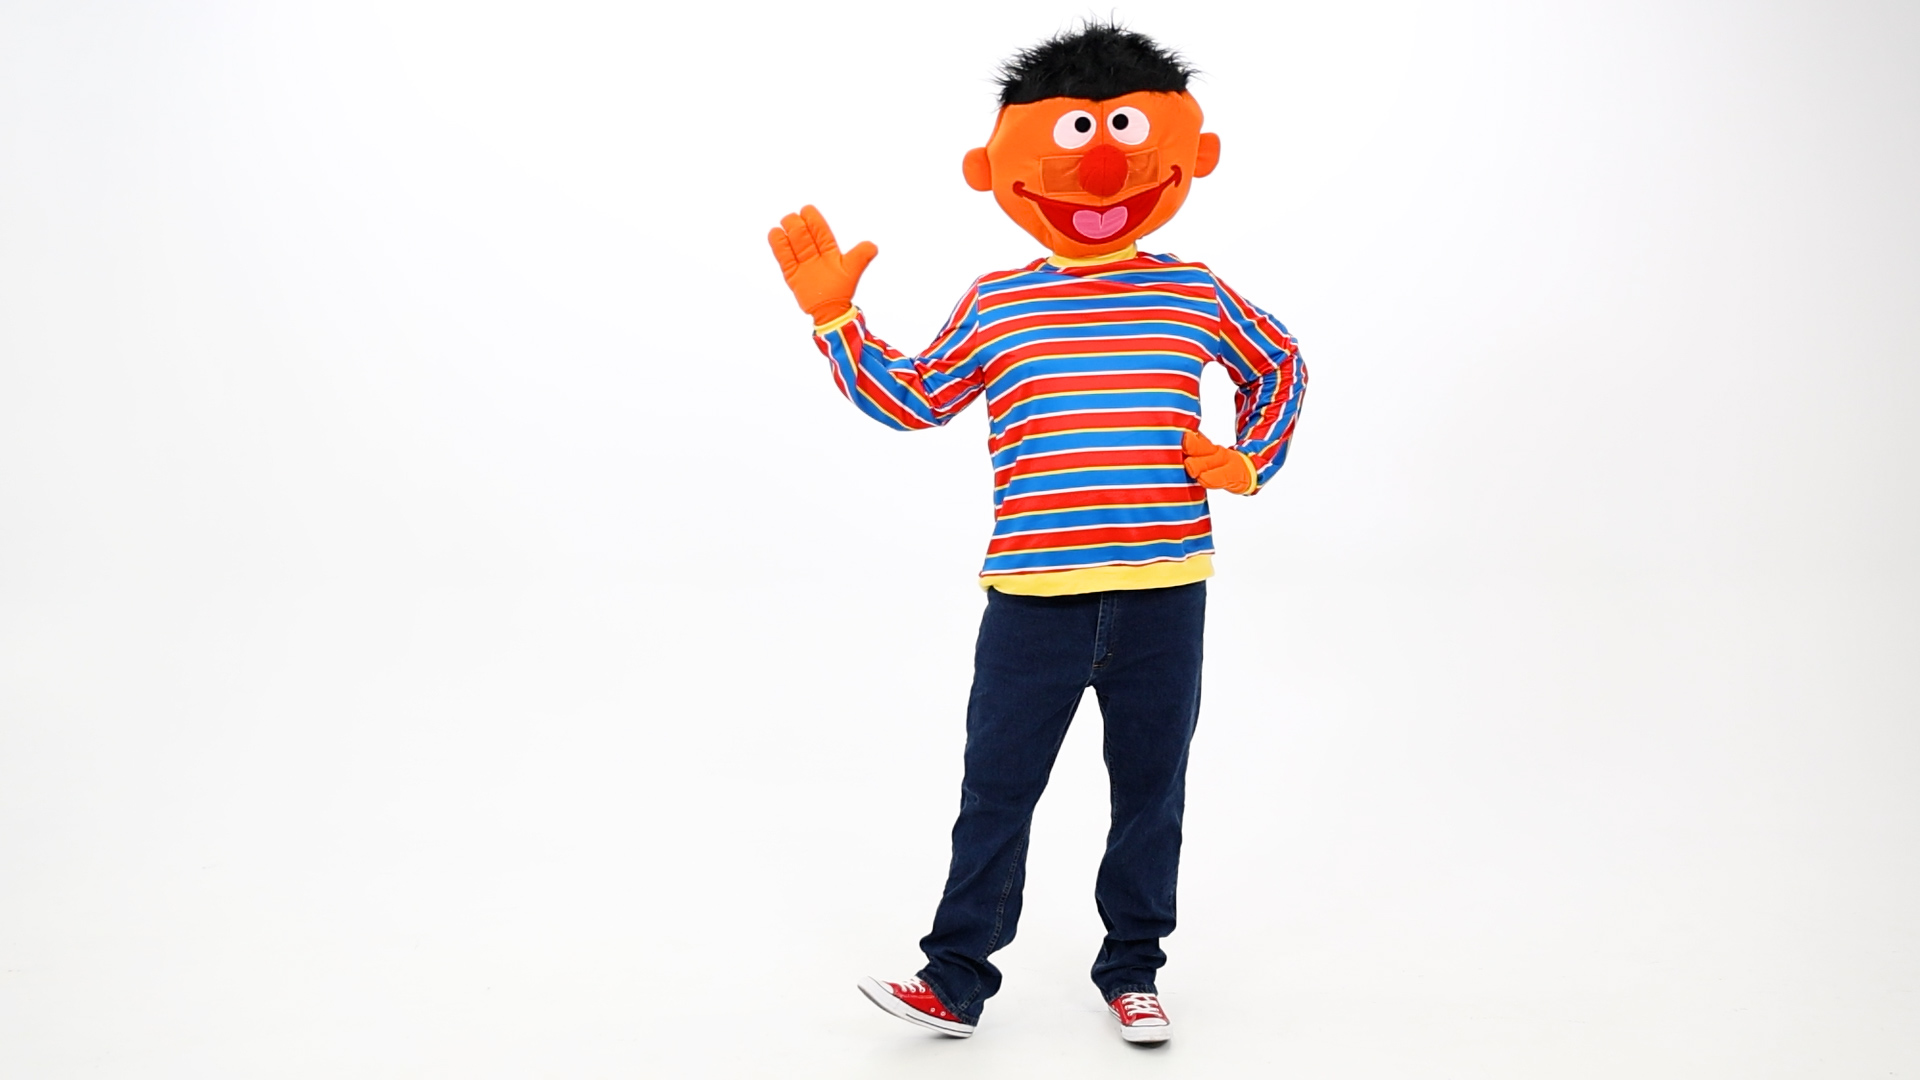 FUN2560PL Plus Size Sesame Street Ernie Mascot Costume for Men